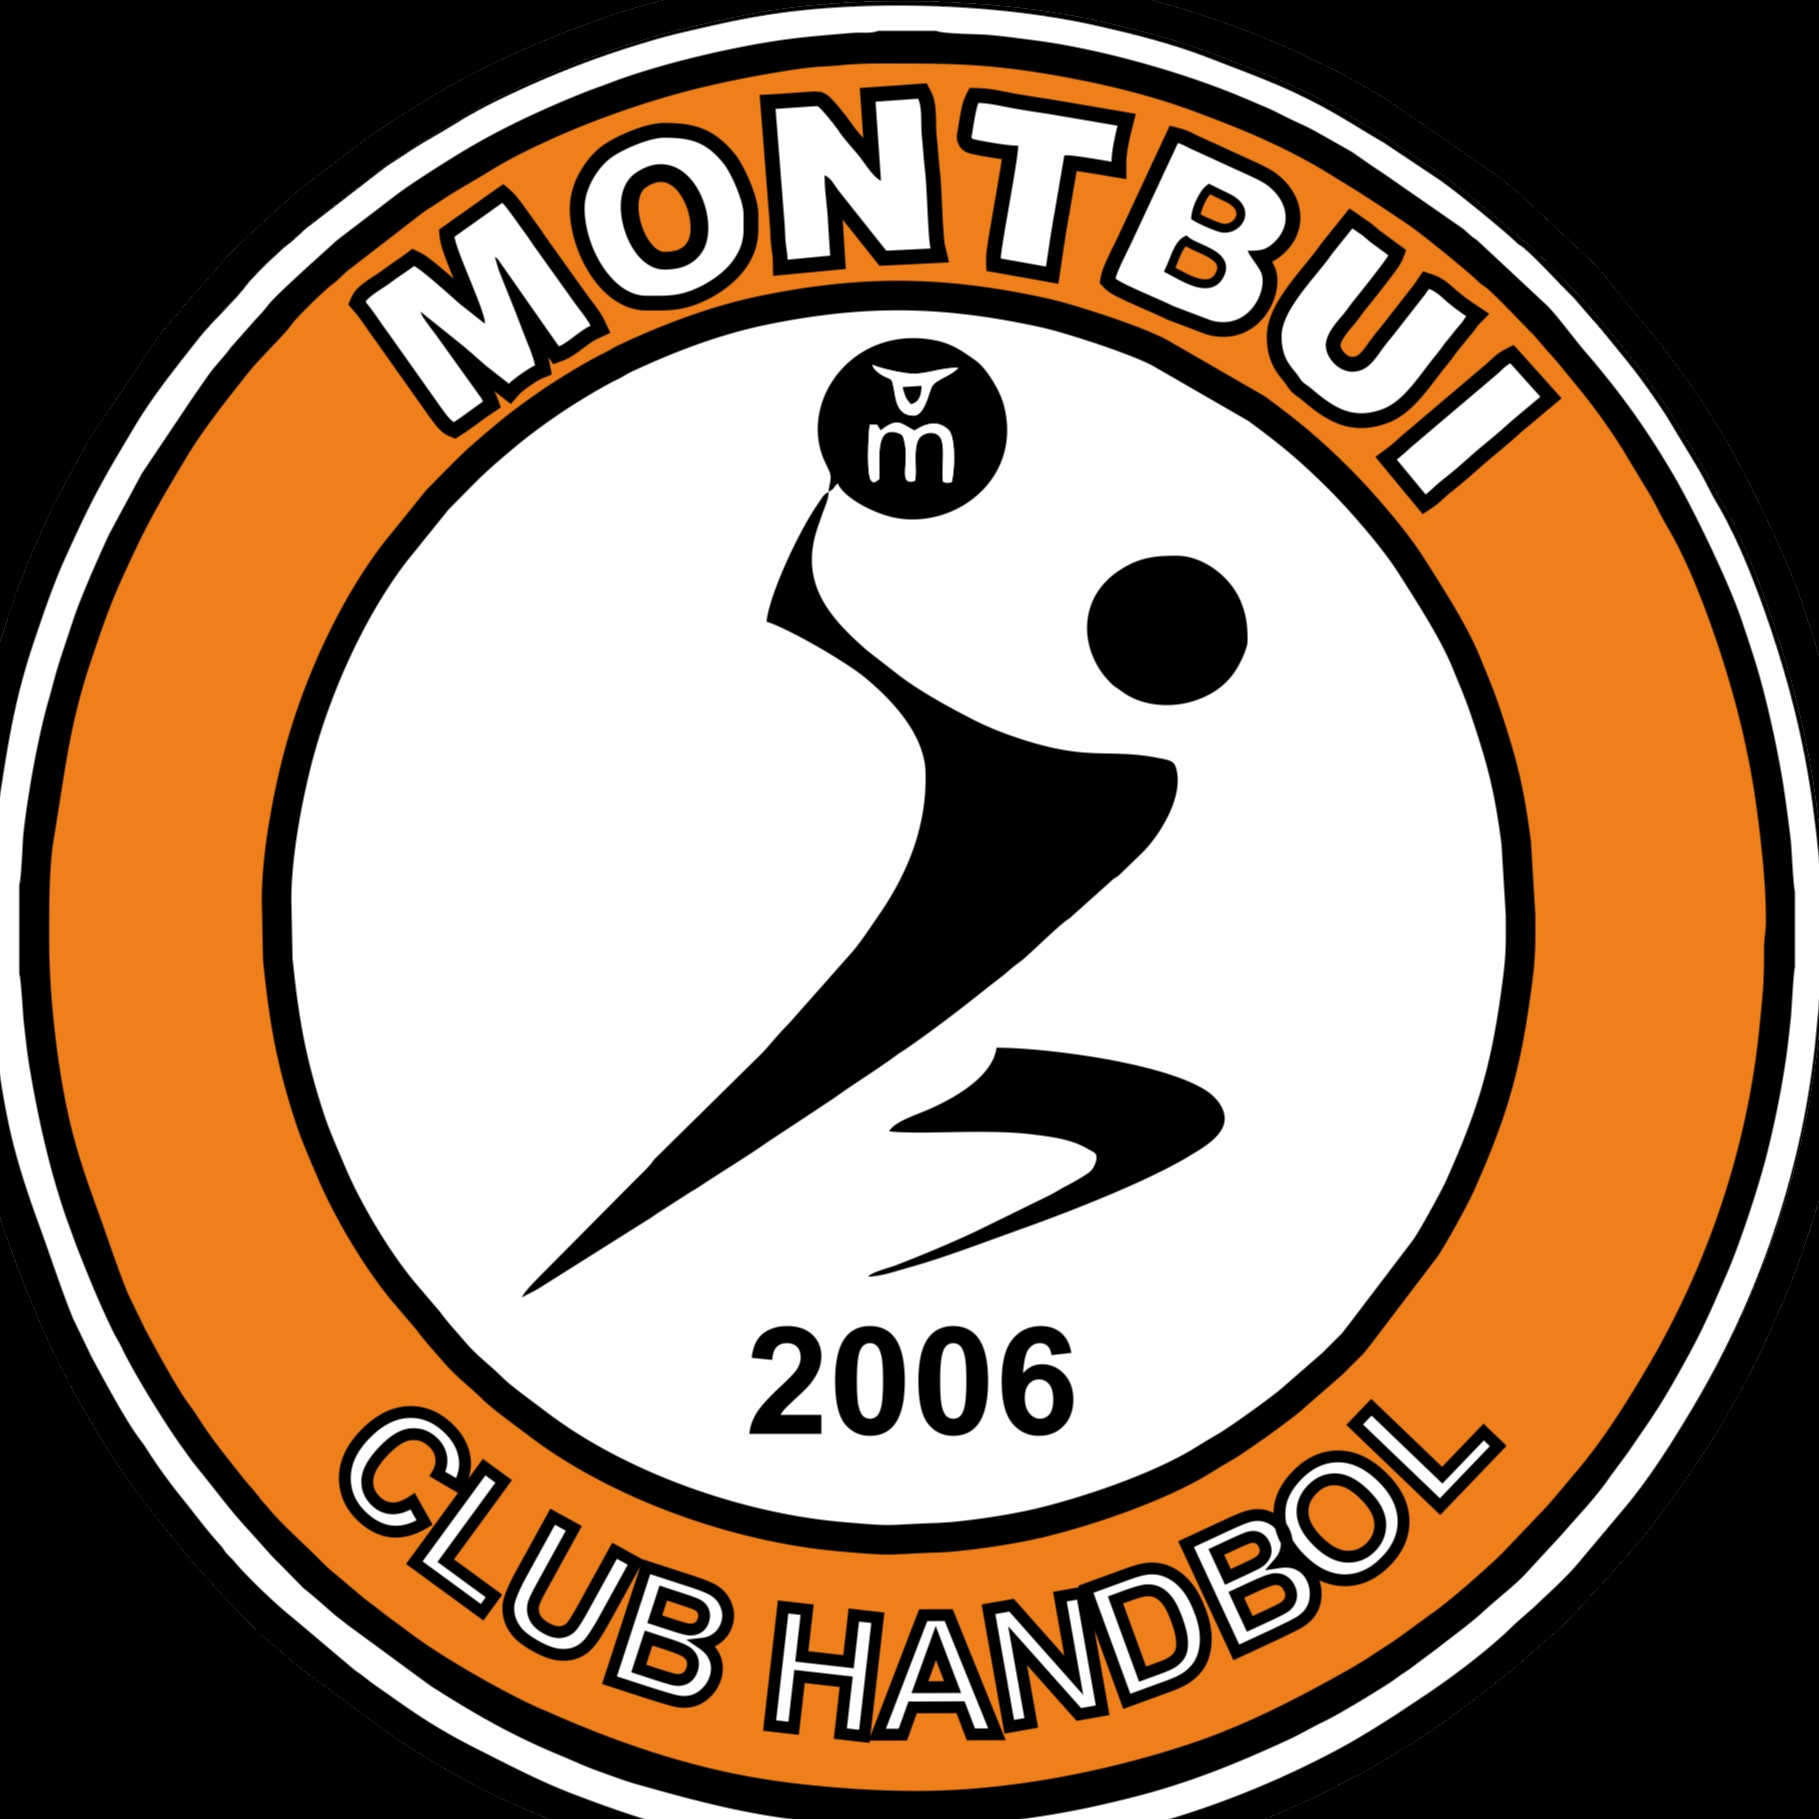 CLUB HANDBOL MONTBUI